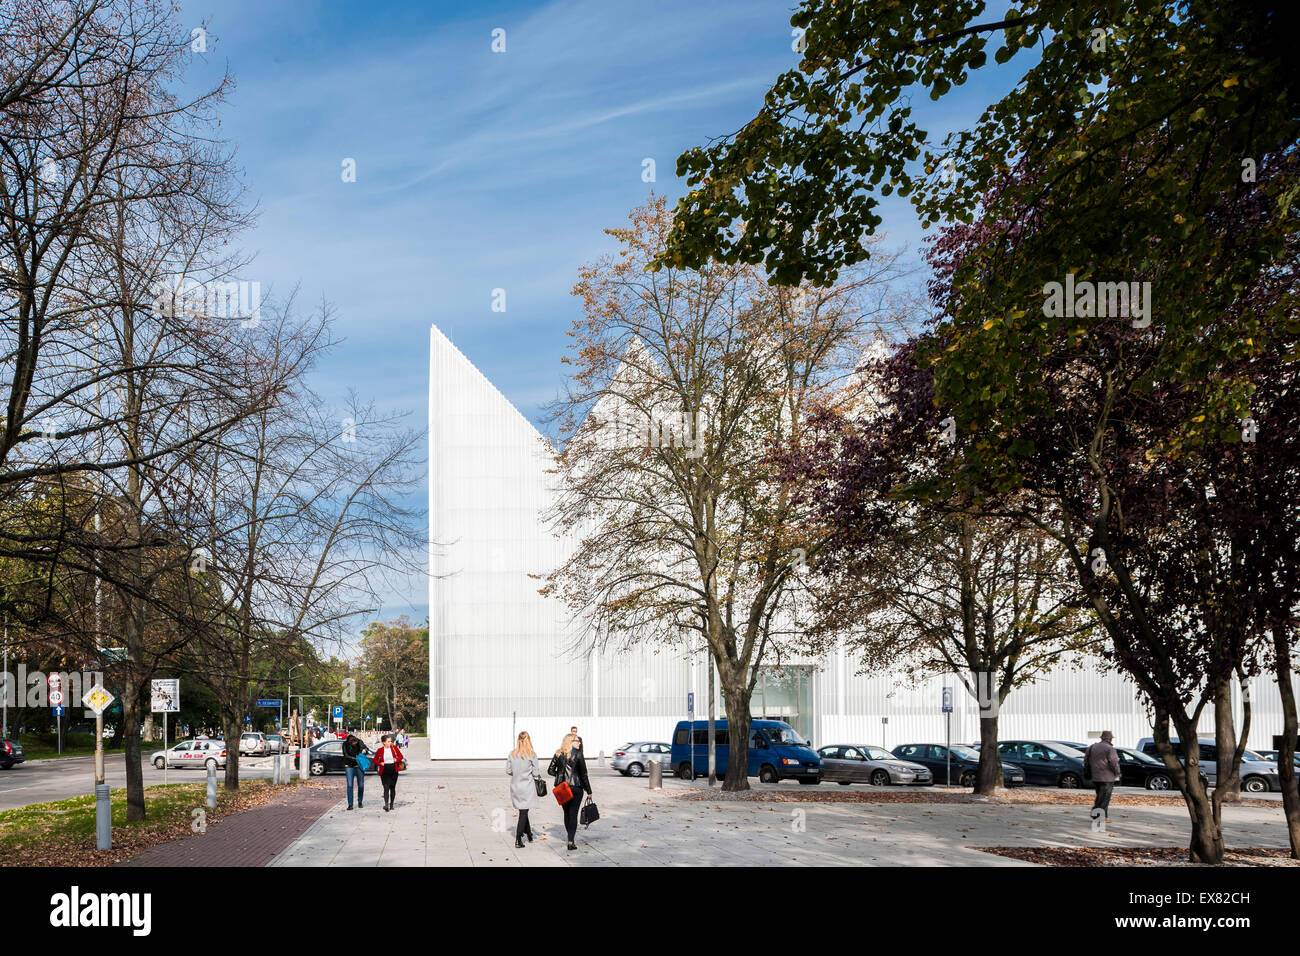 Public square with philharmonic hall beyond. Szczecin Philharmonic Hall, Szczecin, Poland. Architect: Estudio Barozzi Veiga, 201 Stock Photo